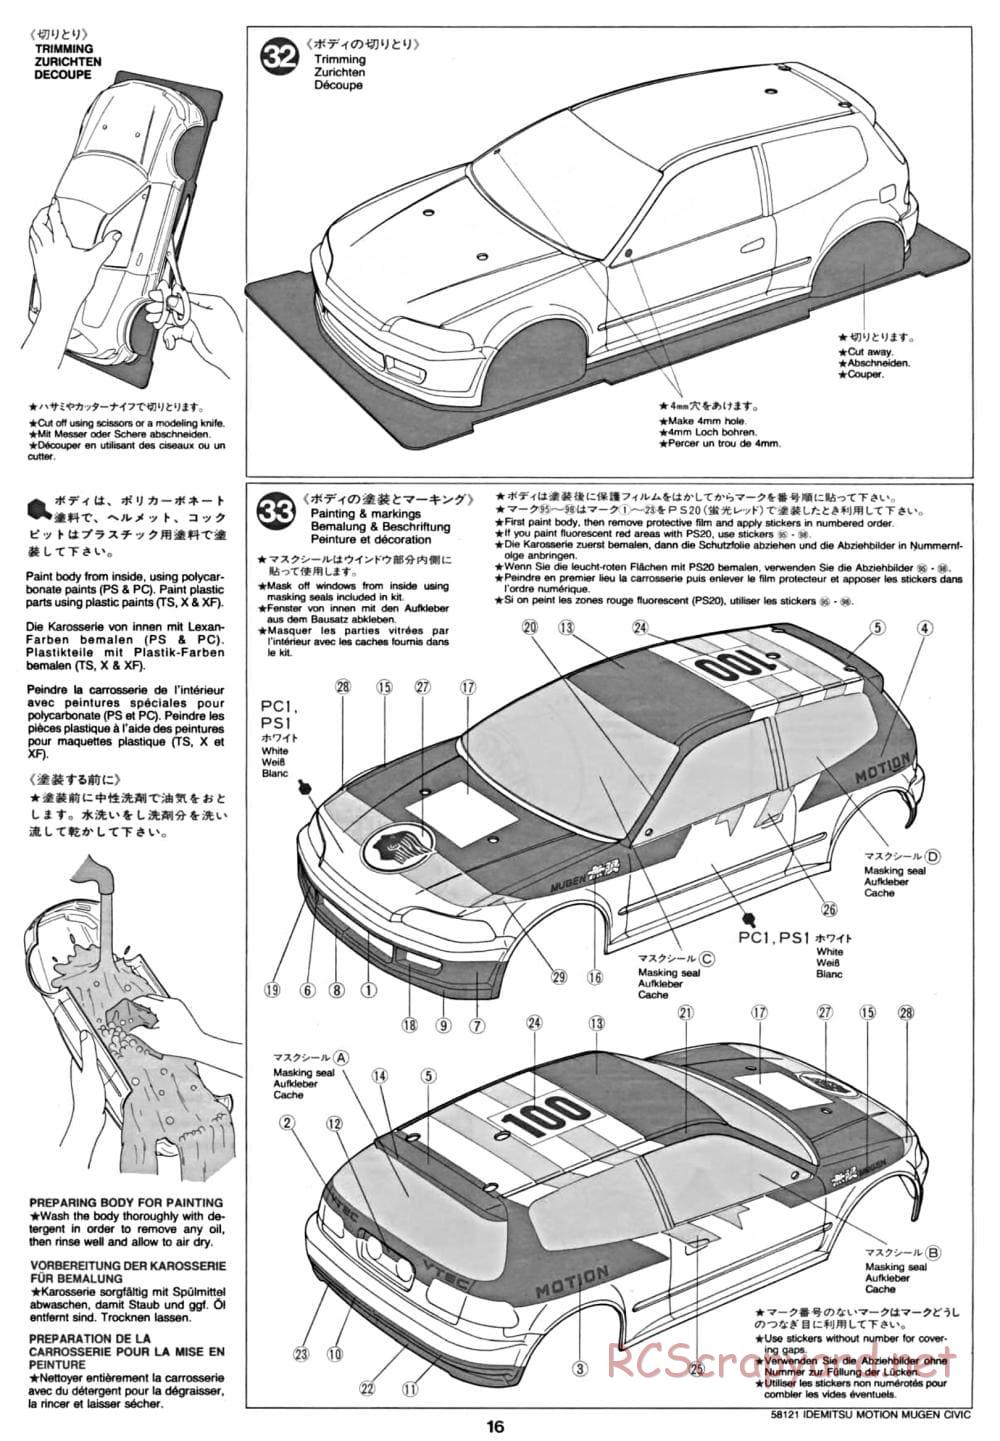 Tamiya - Idemitsu Motion Mugen Civic - FF-01 Chassis - Manual - Page 16